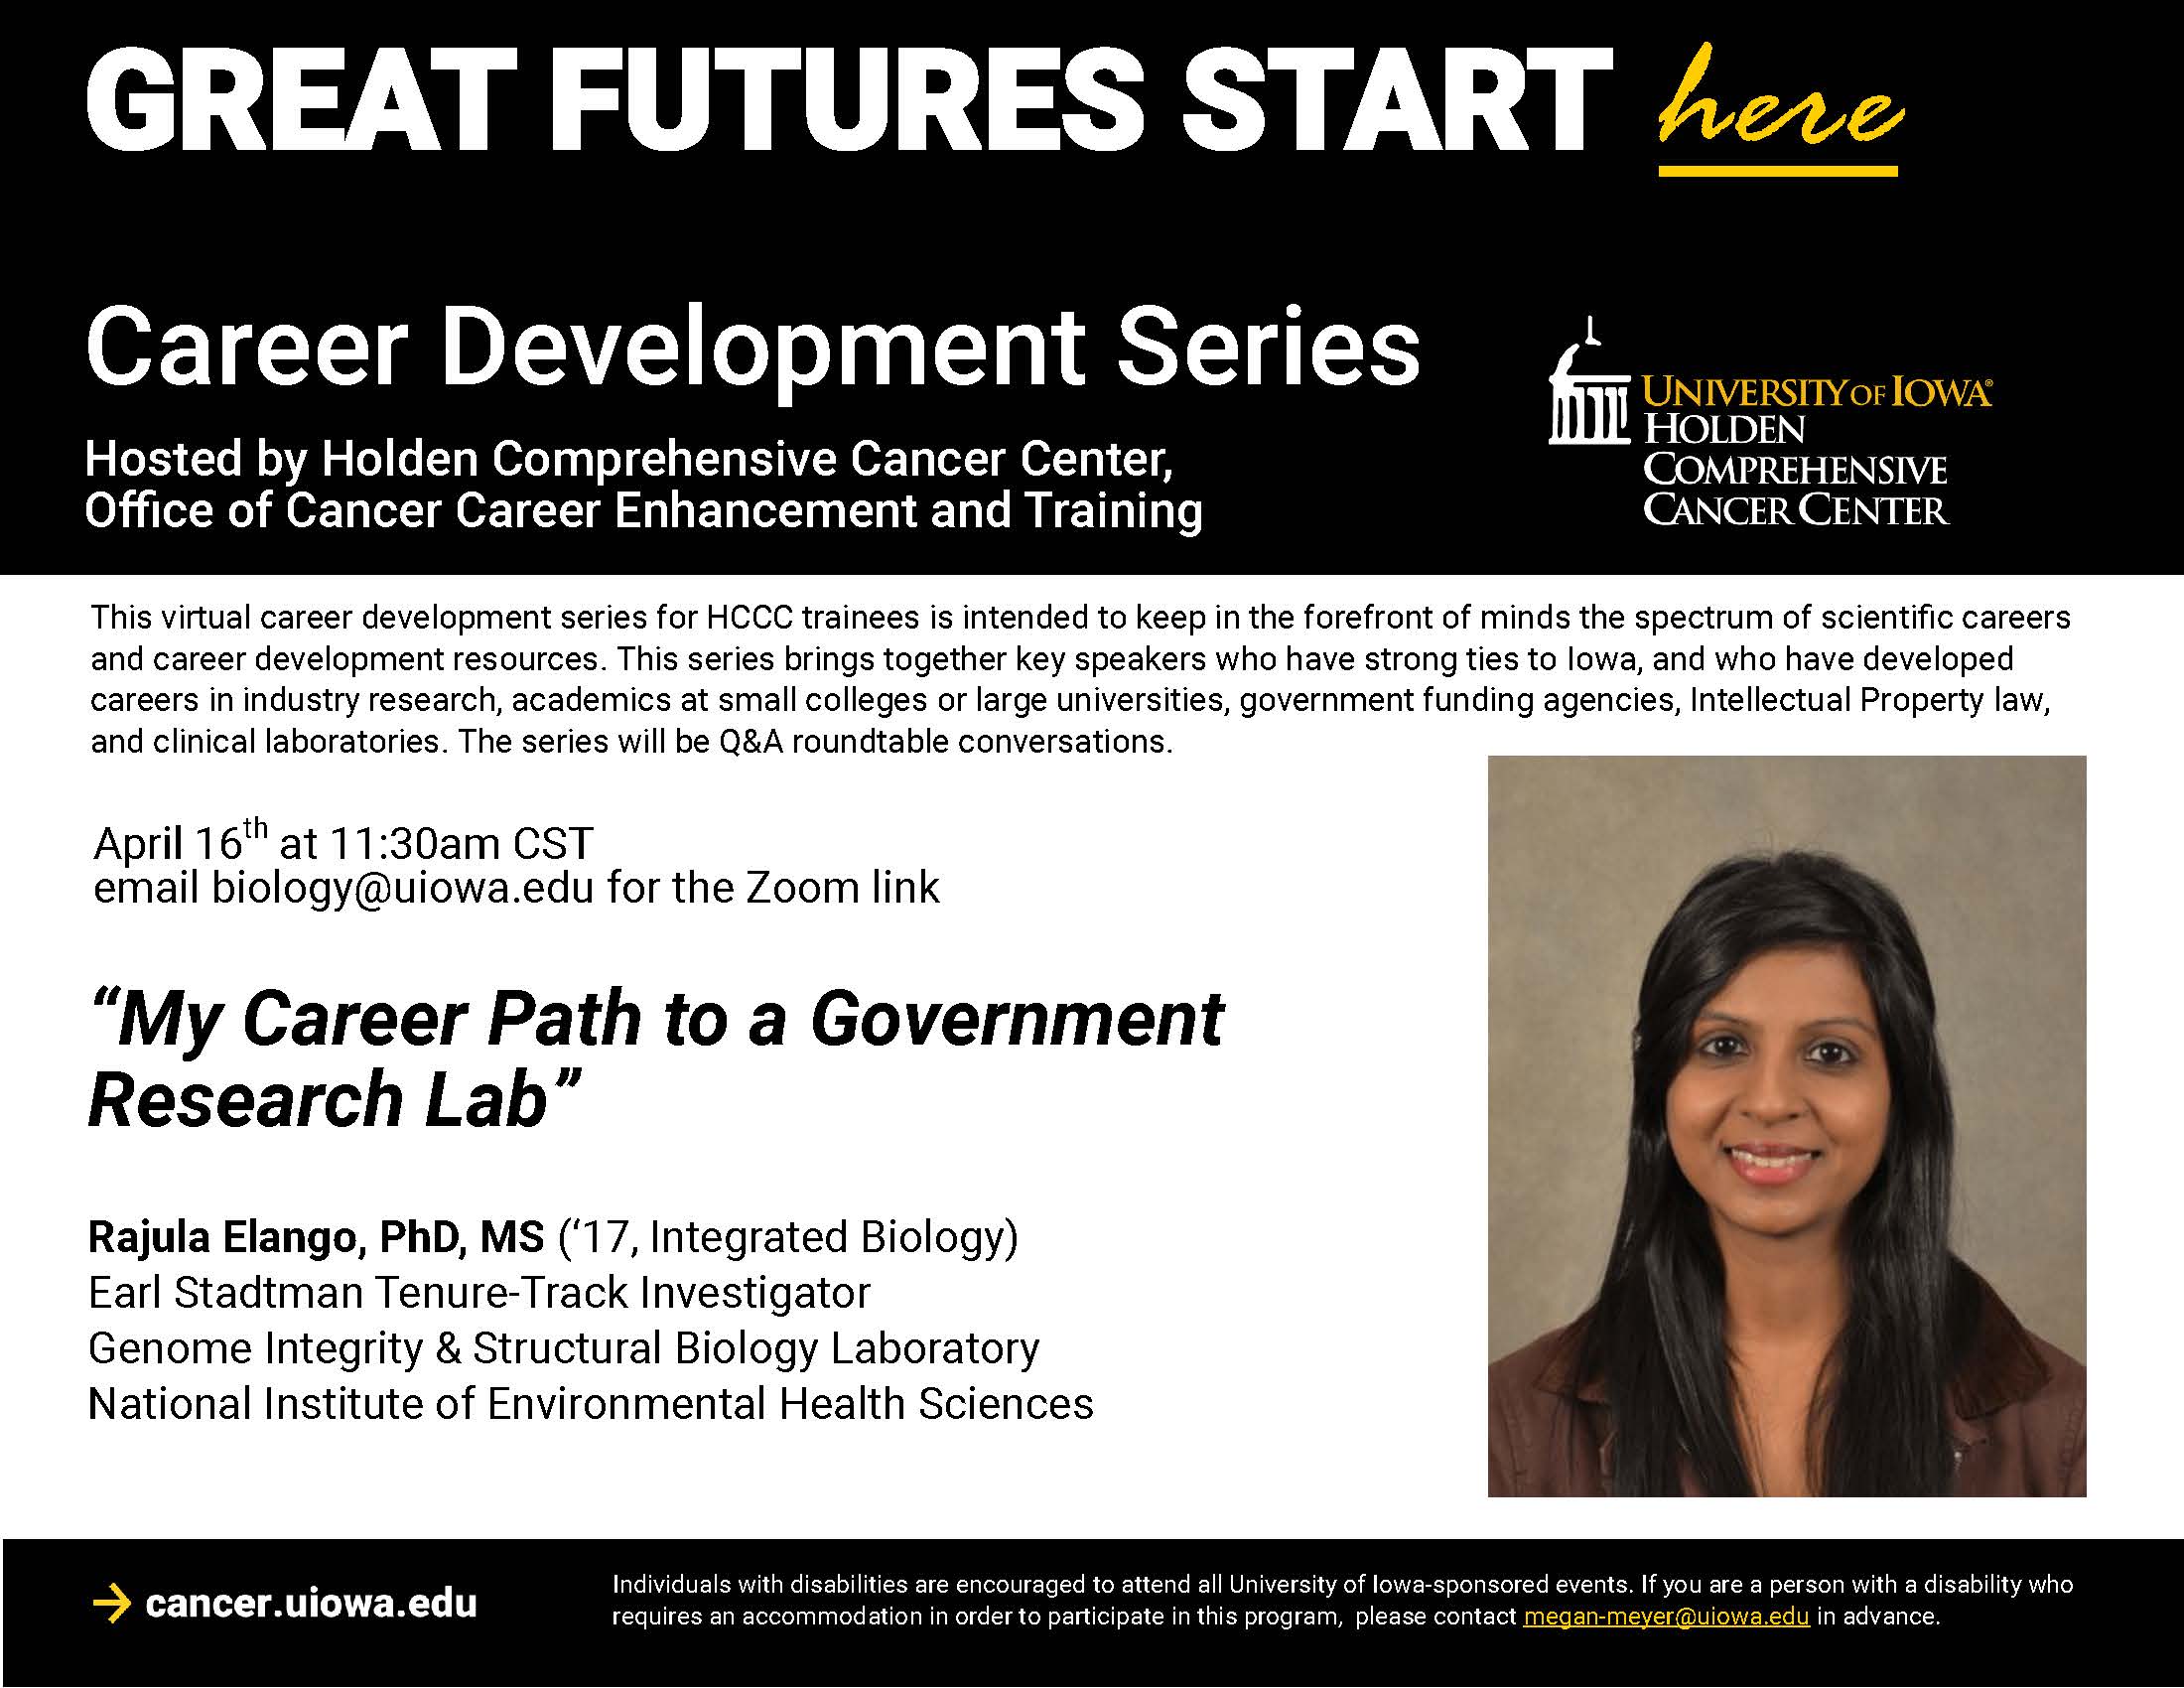 Career Development Series: Rajula Elango's Career Path to a Government Research Lab